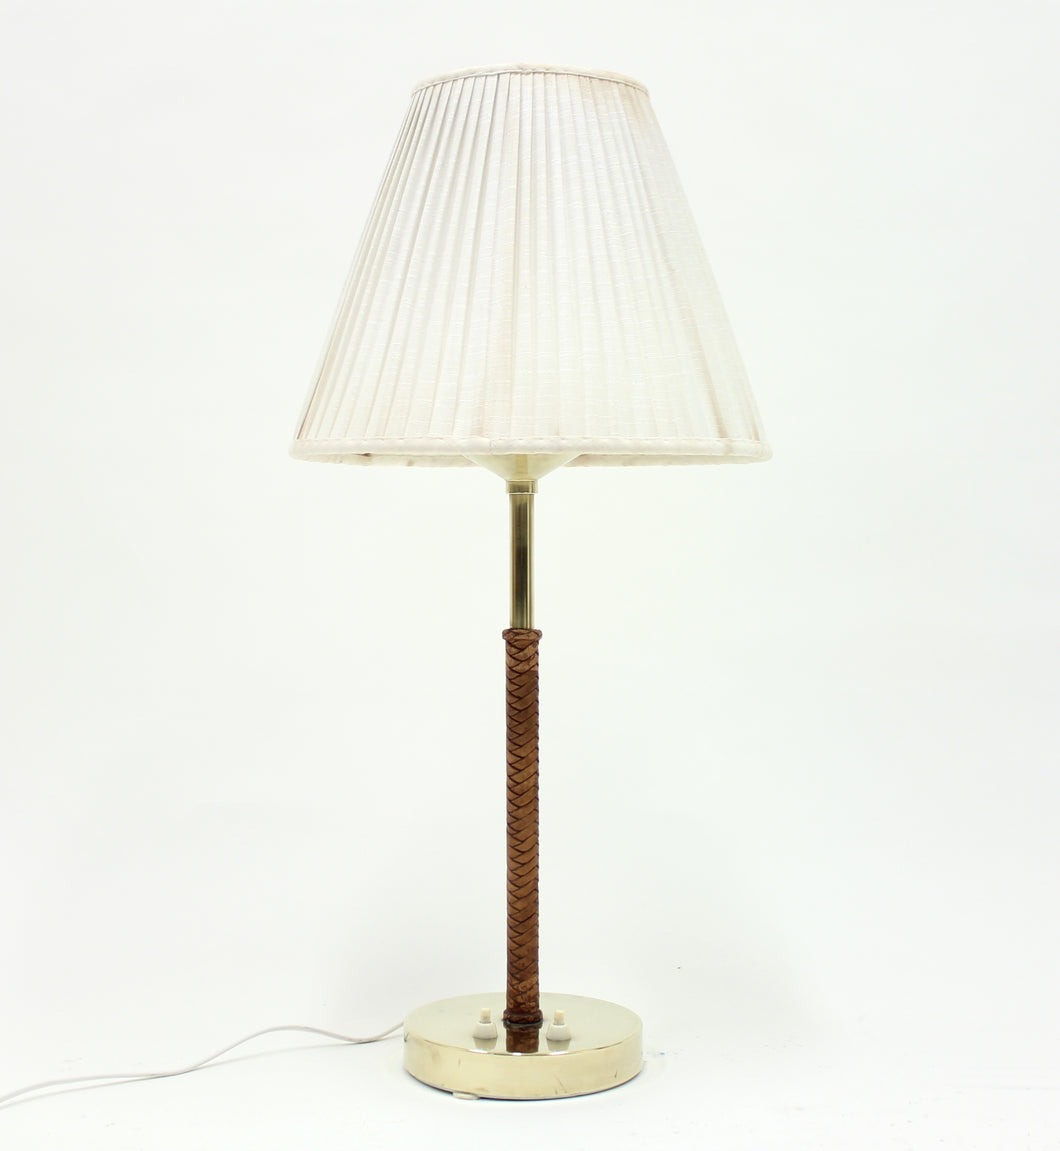 Åke Hultgren, table lamp, Nordiska Kompaniet, 1950s